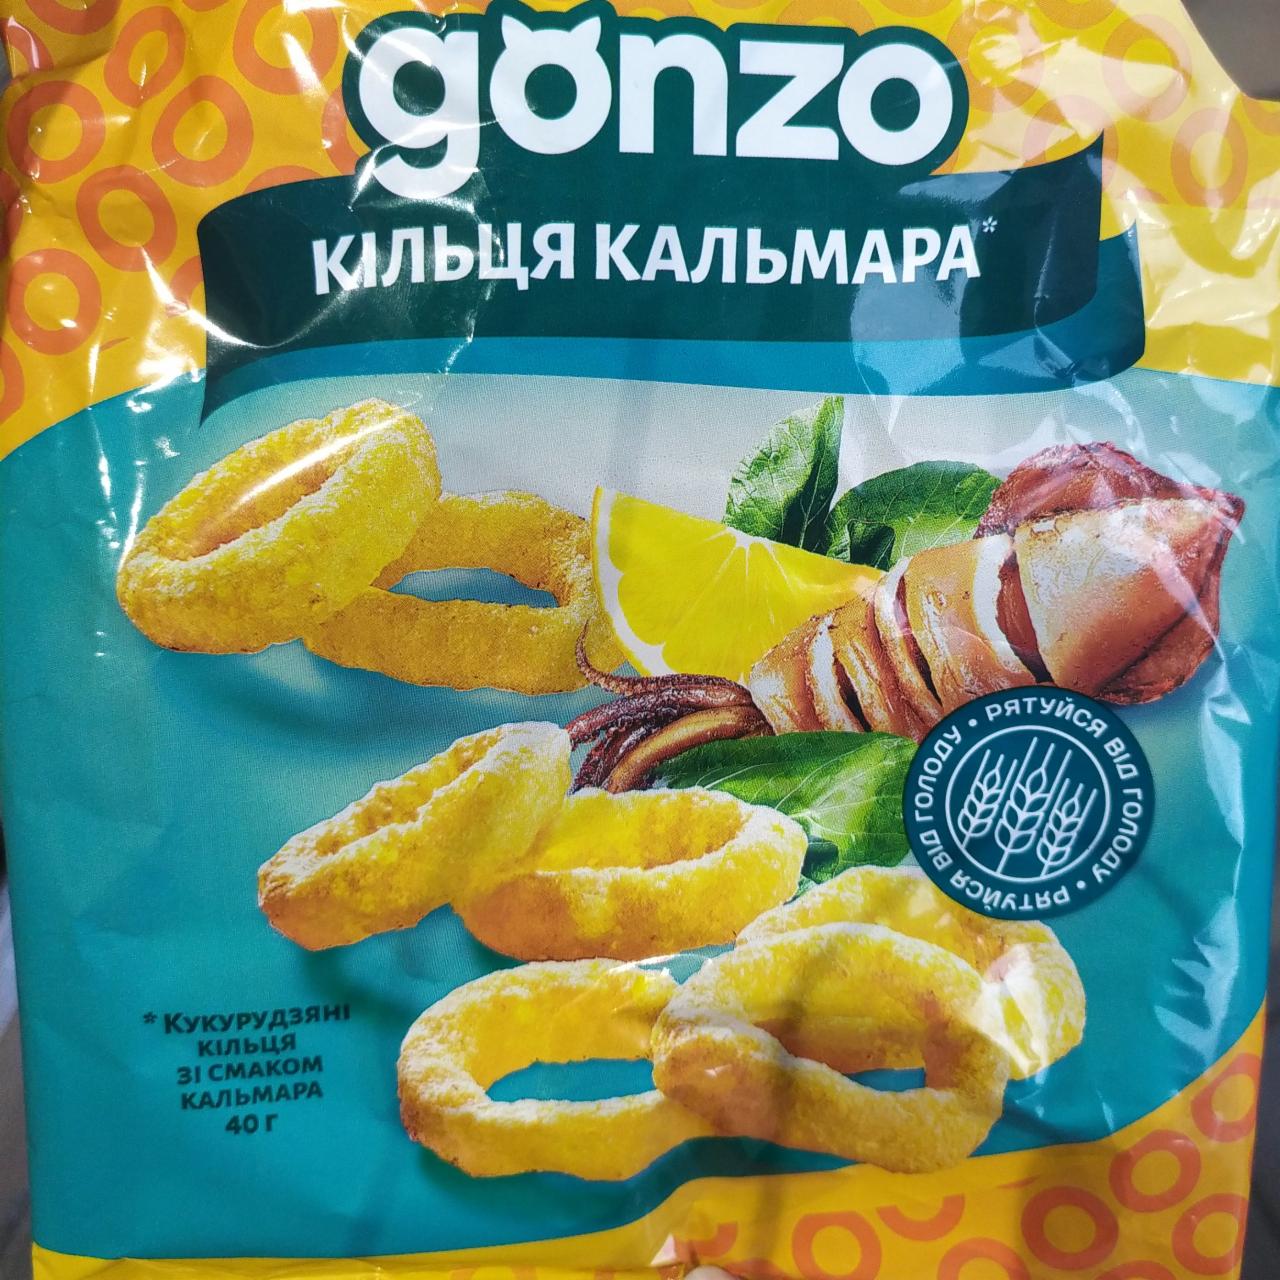 Фото - Кукурузные кольца со вкусом кальмара Gonzo